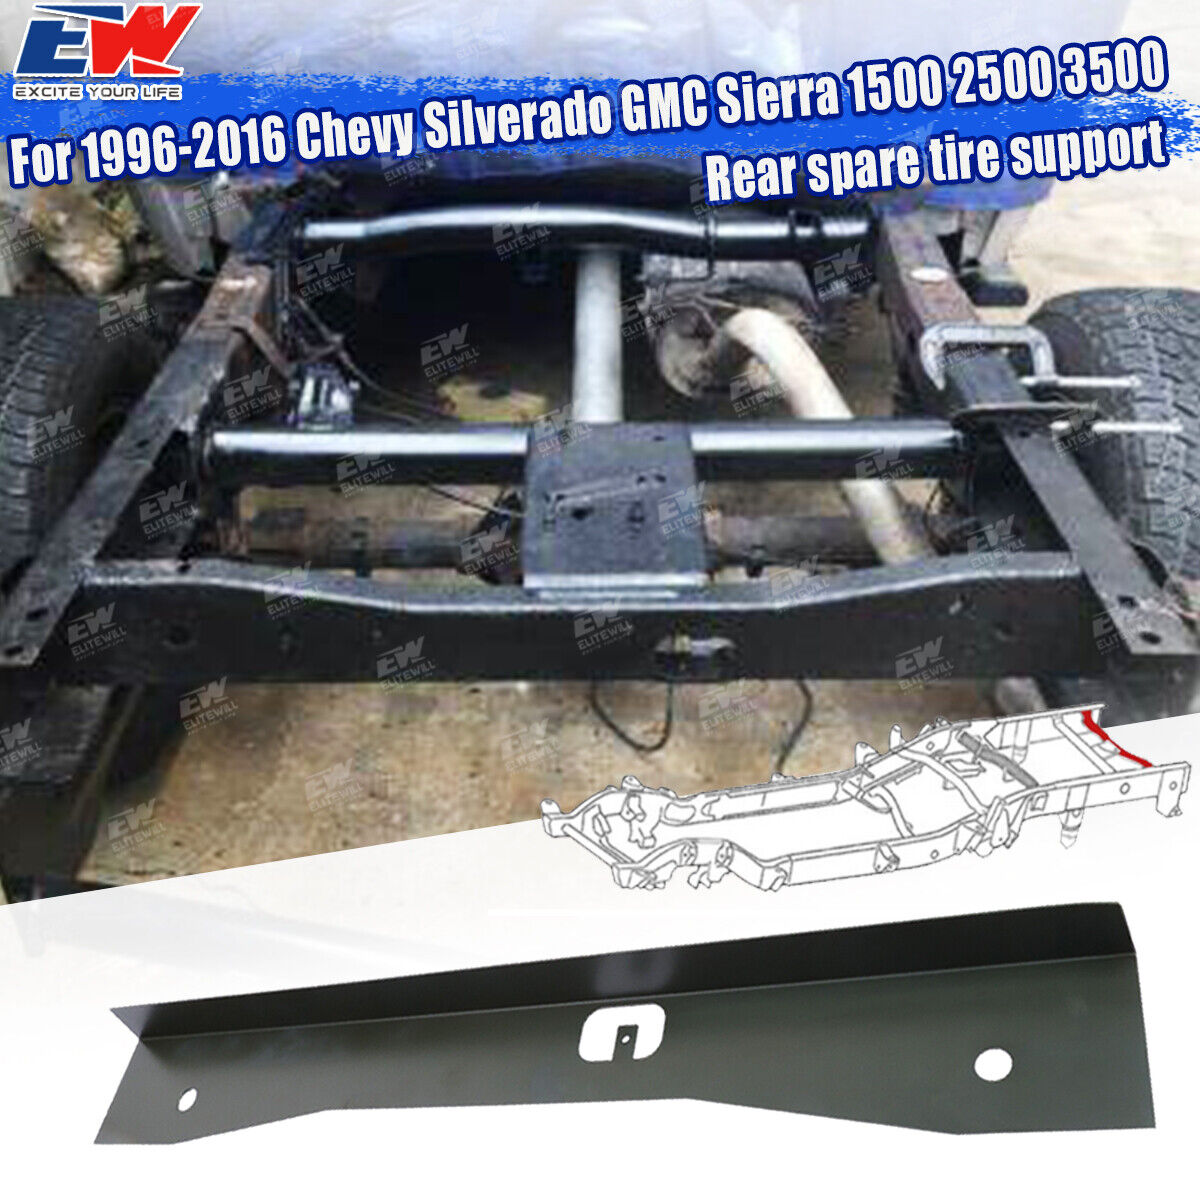 ELITEWILL For Chevrolet Silverado Gmc Sierra Rear Spare Tire Frame Support Plate